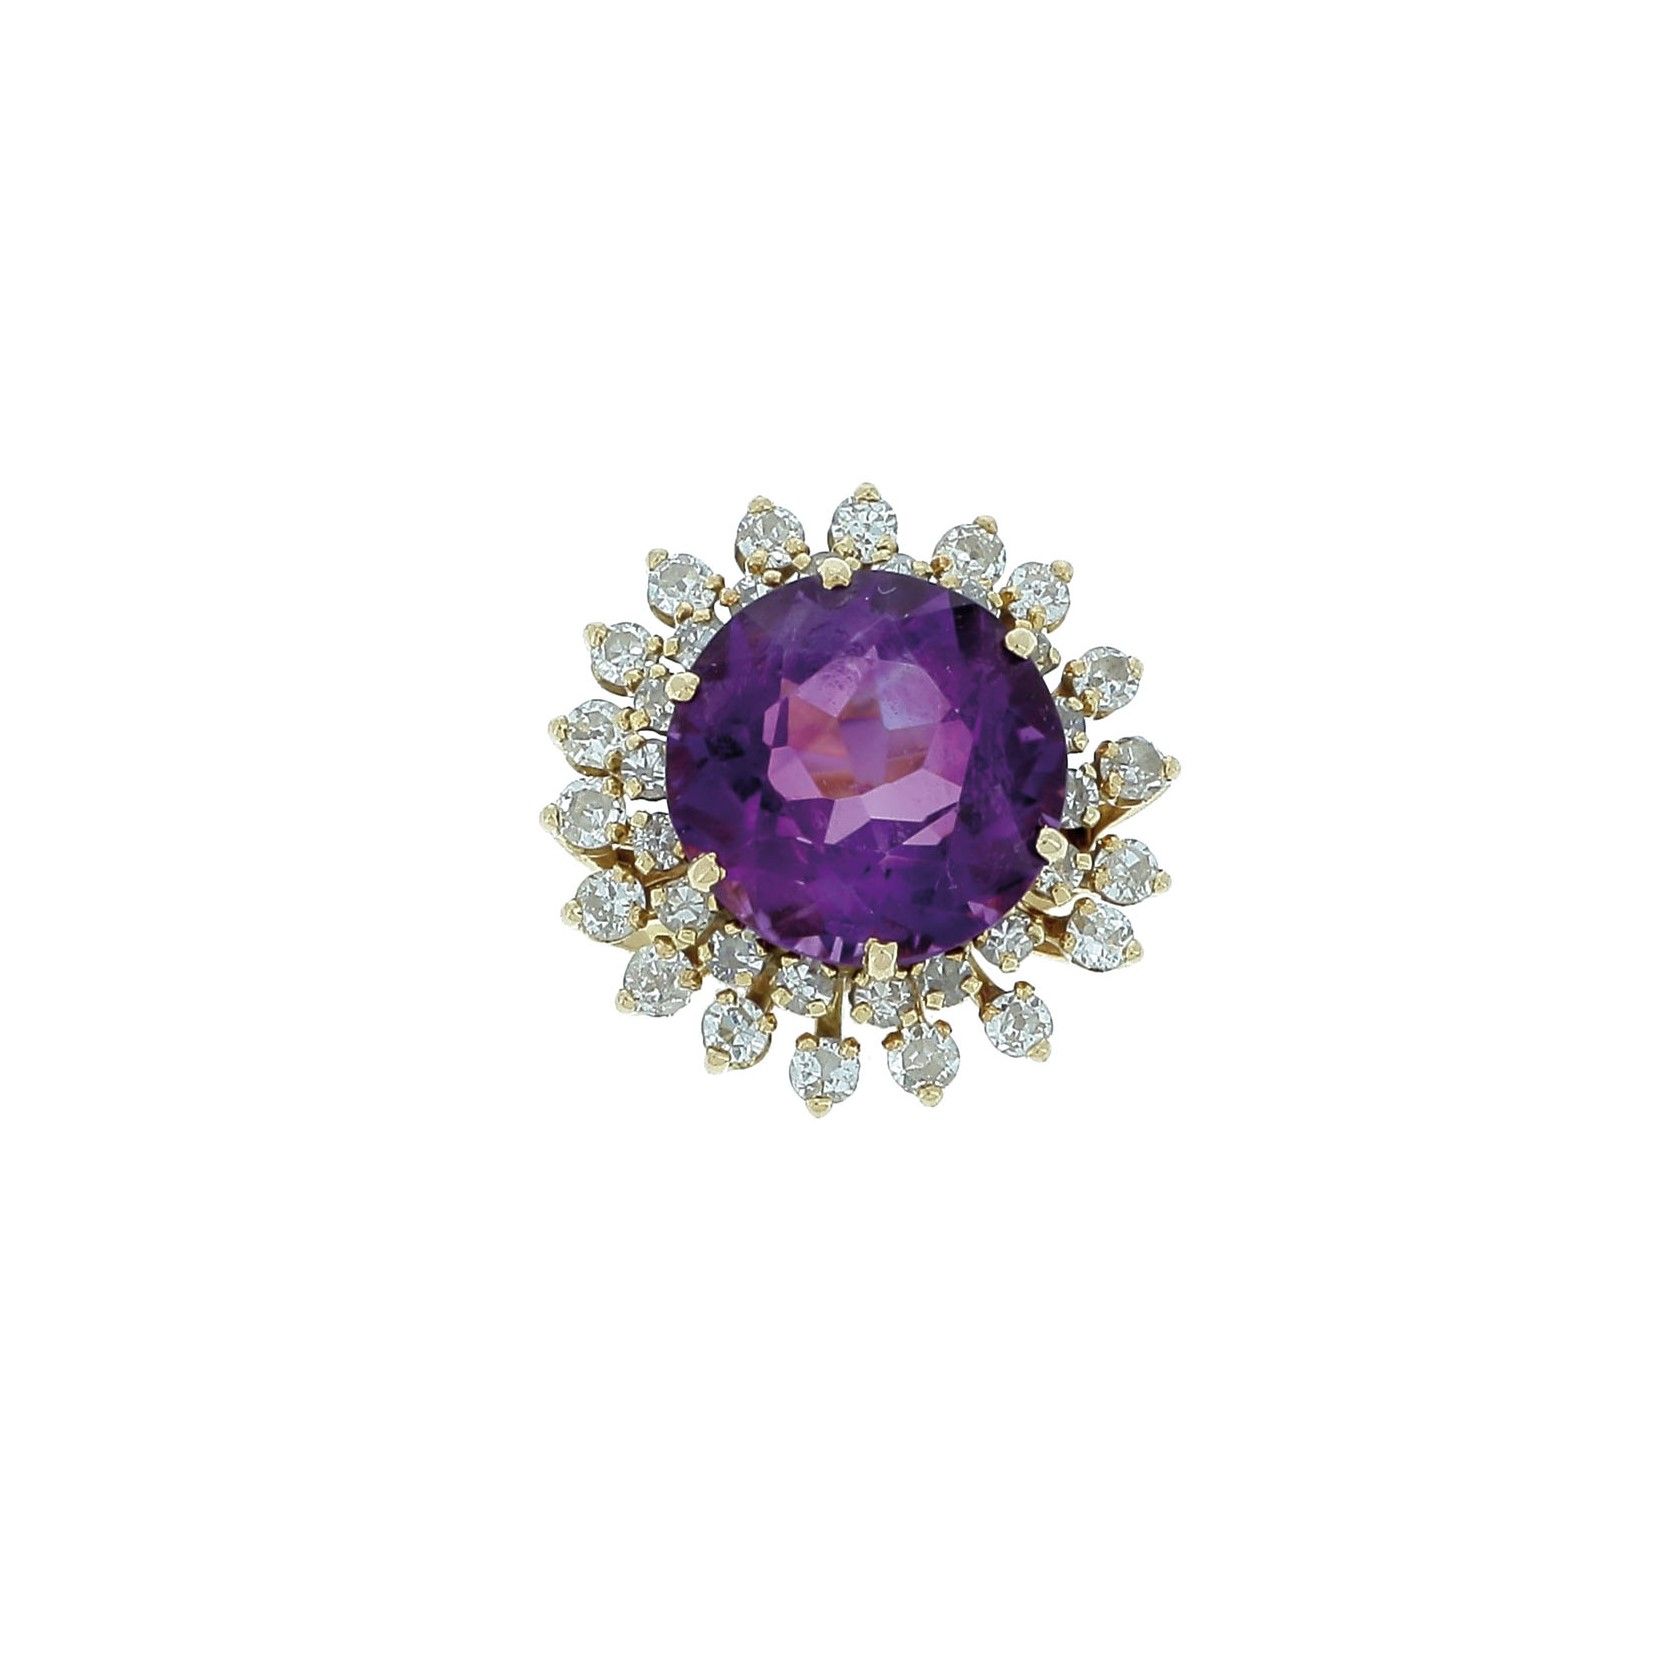 Null 戒指

黄金戒指，以圆形紫水晶为中心，镶有双边钻石。

约1900年。

一枚18K金、紫水晶和钻石戒指。约1900年。



RC。

TDD：52&hellip;